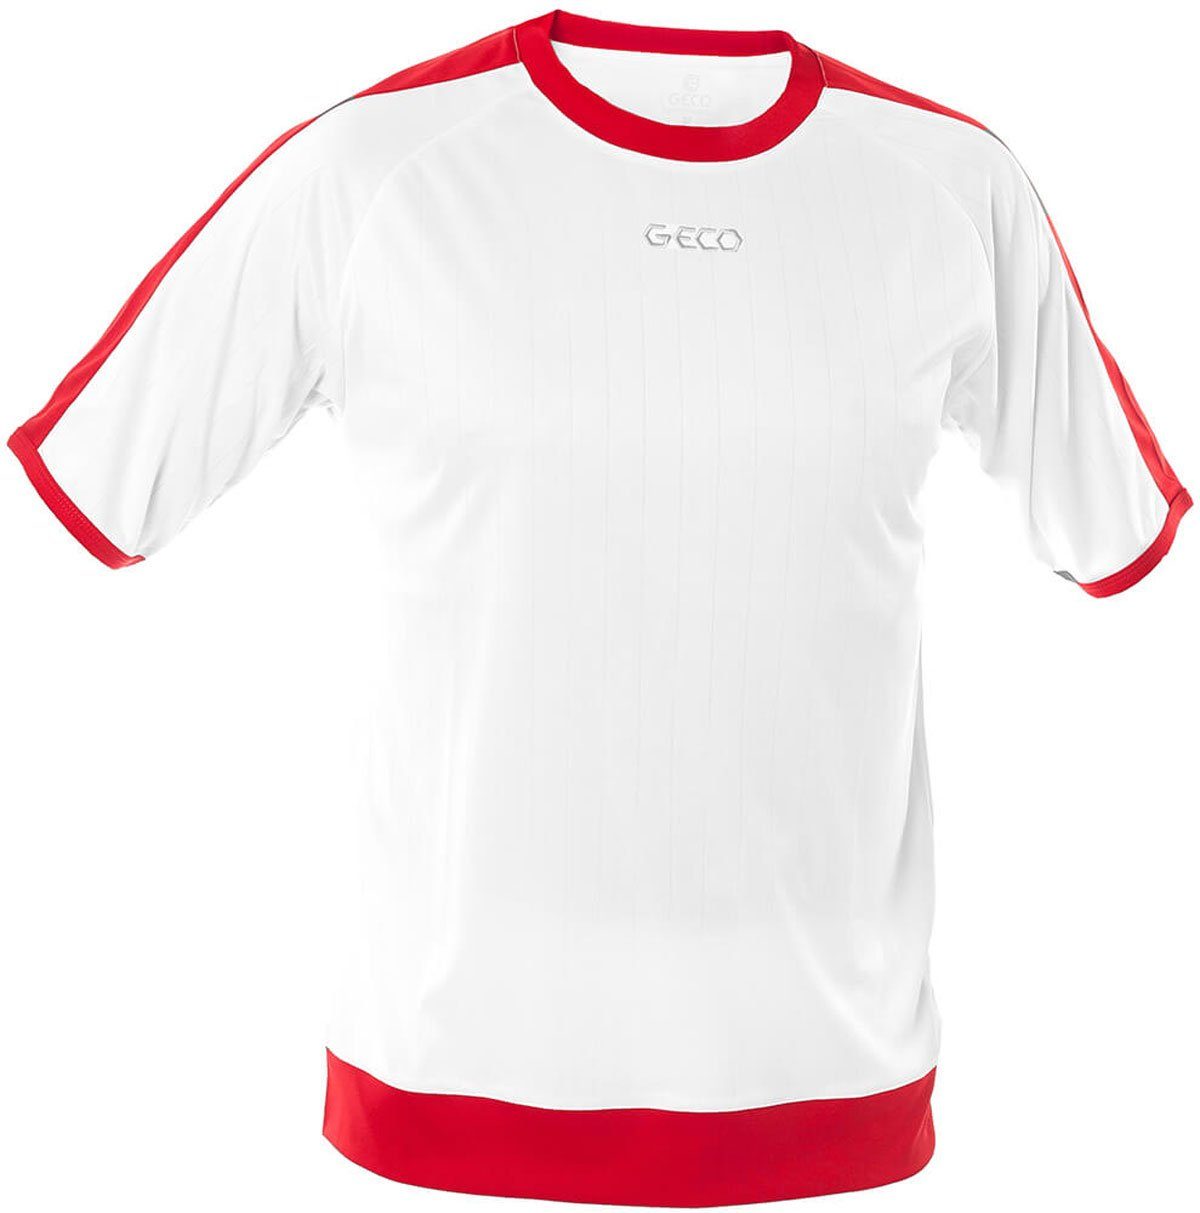 zweifarbig kurzarm weiß/rot NOTOS Trikot Geco Sportswear Fußballtrikot Fußball Geco